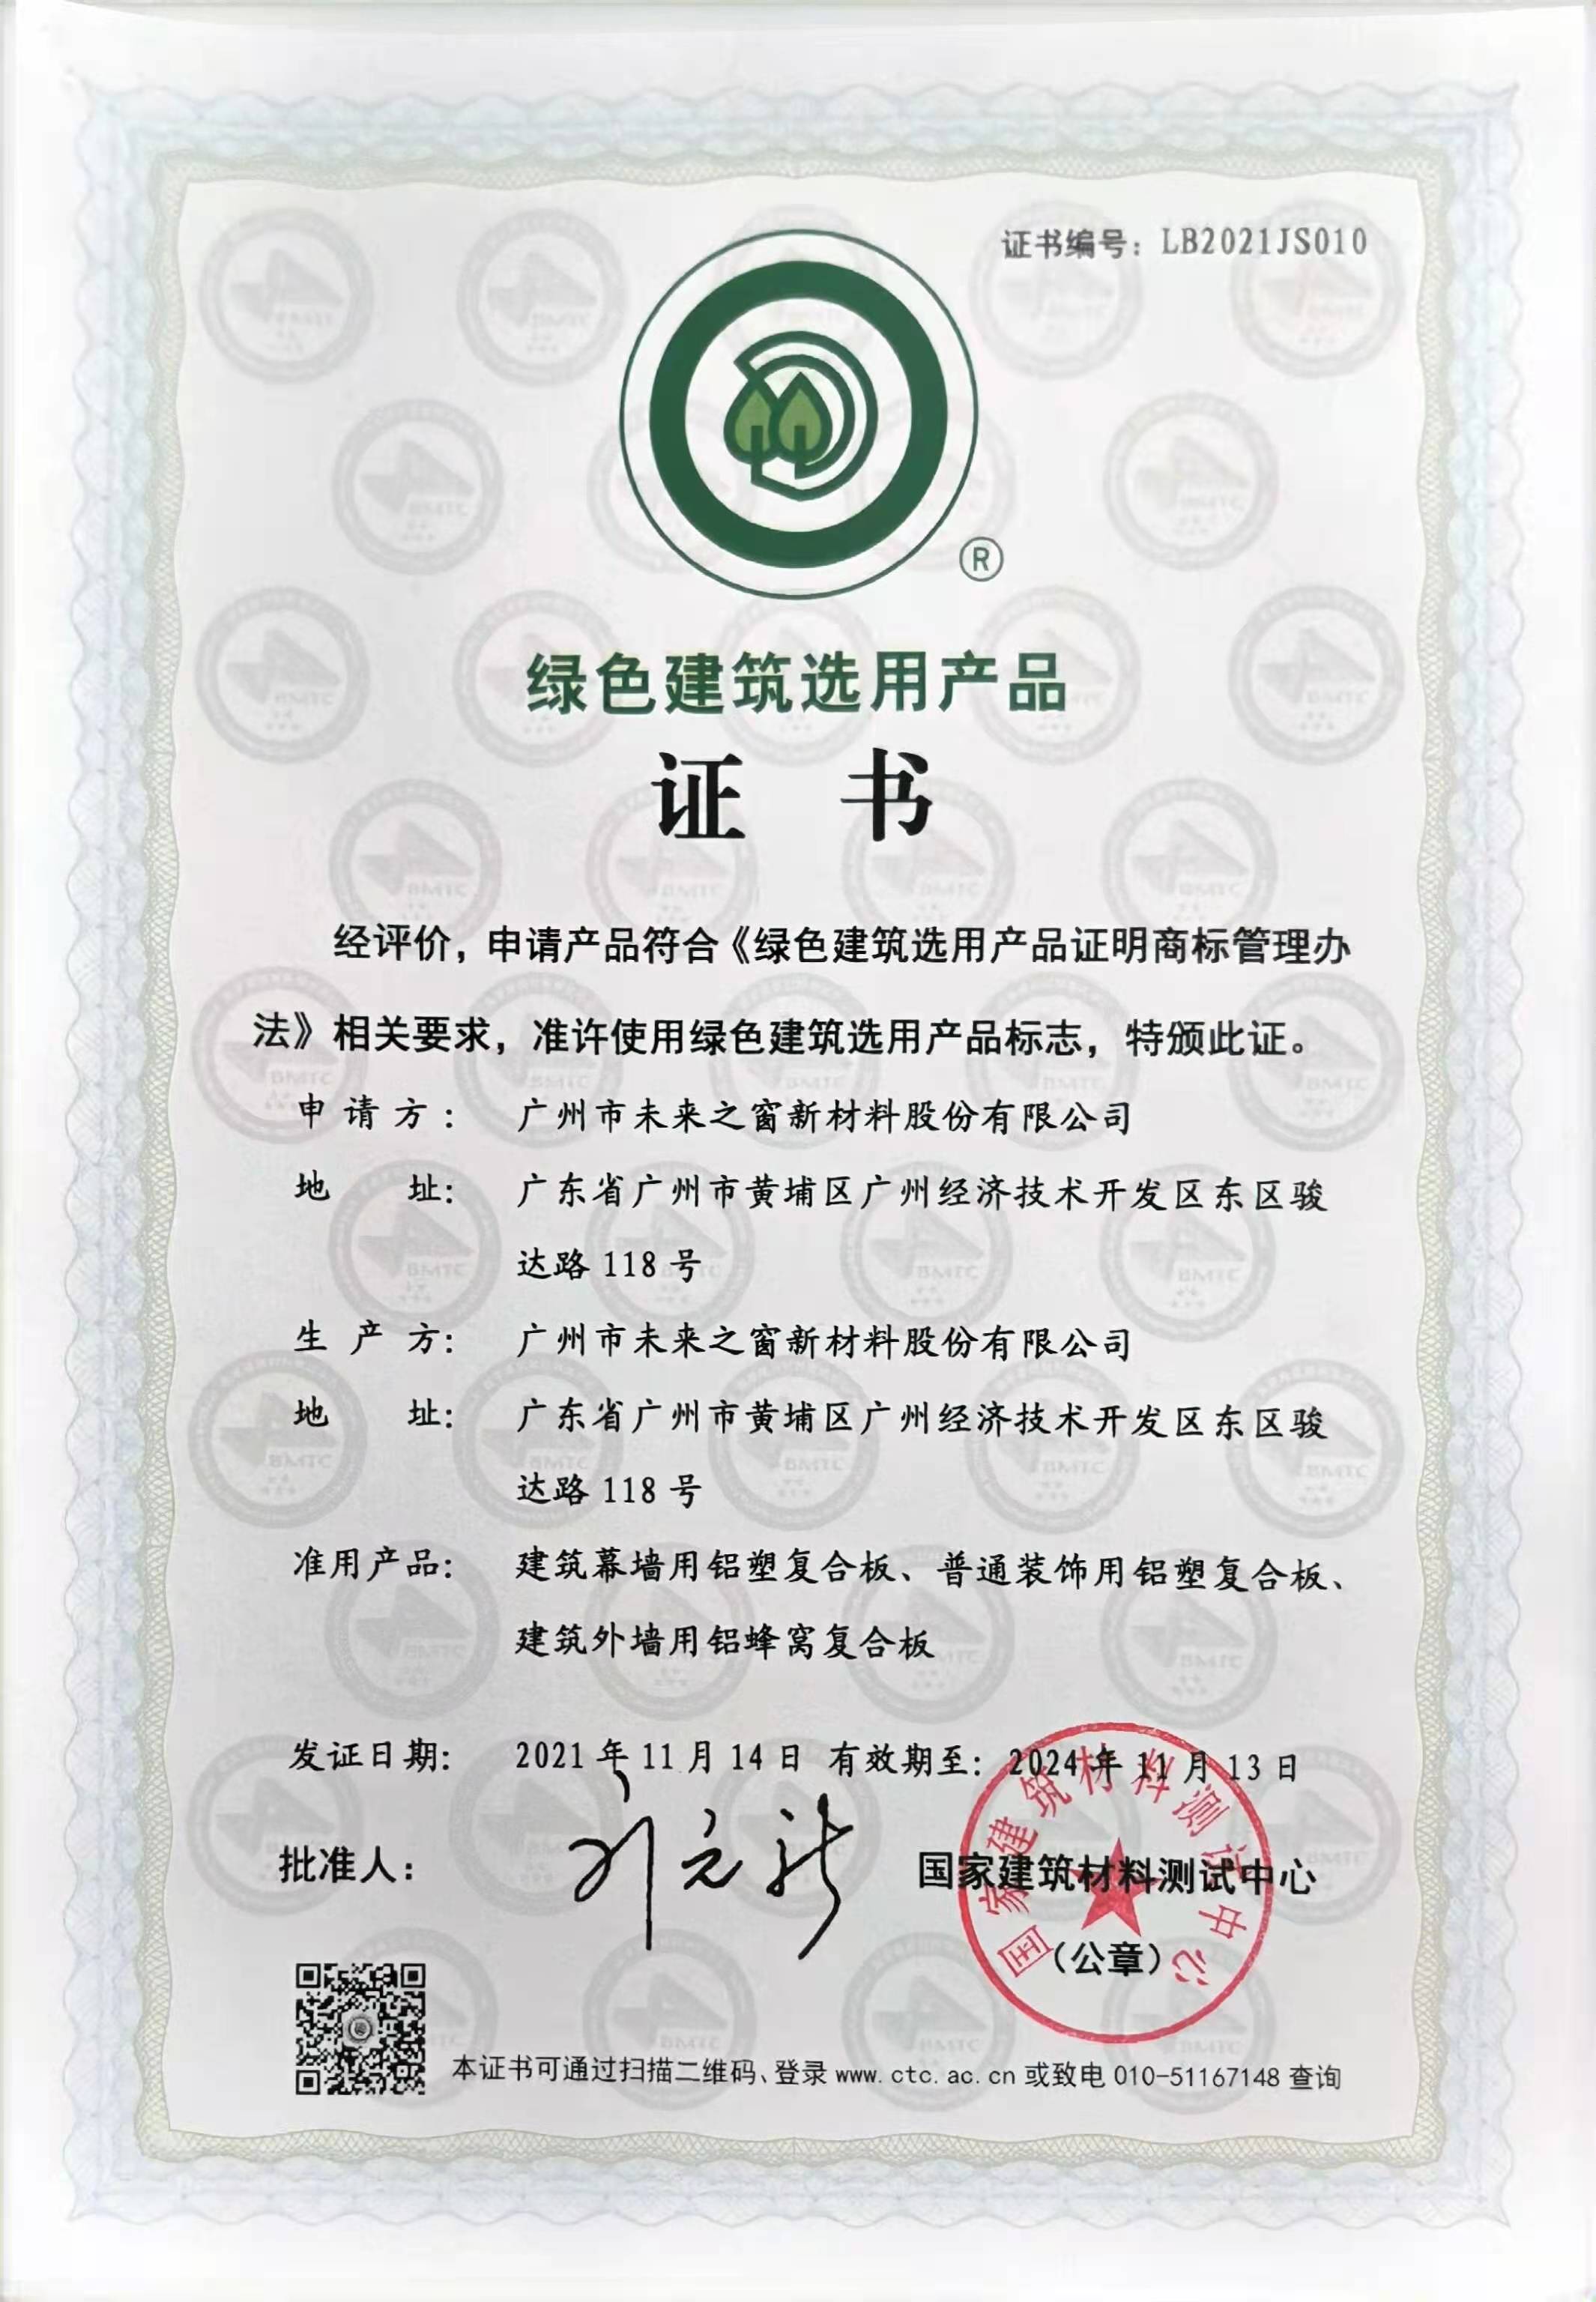 Green Building Materials Certification